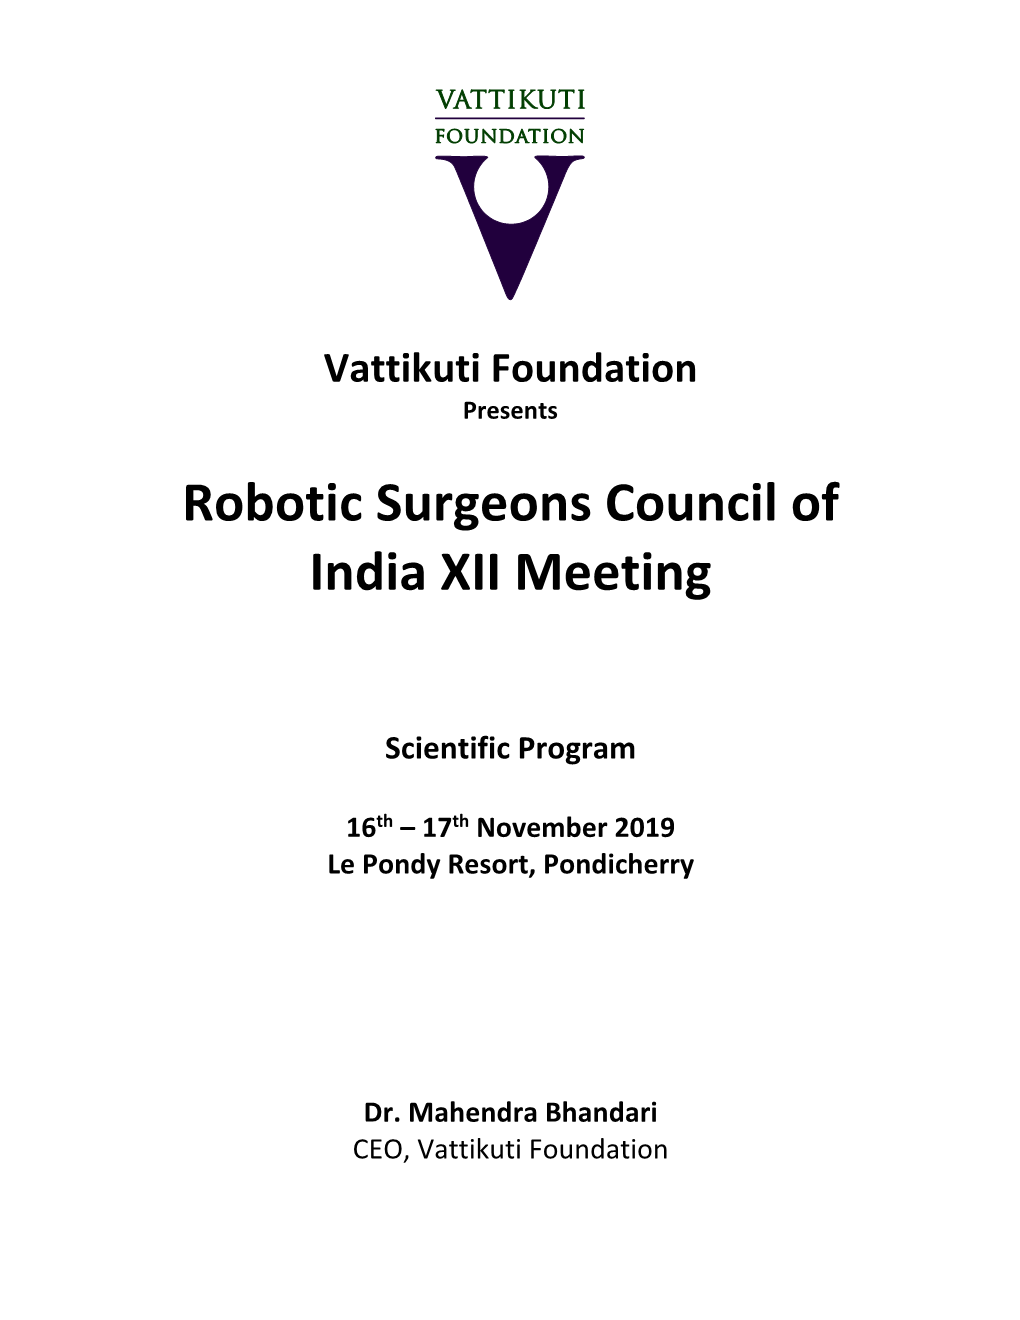 Robotic Surgeons Council of India XII Meeting